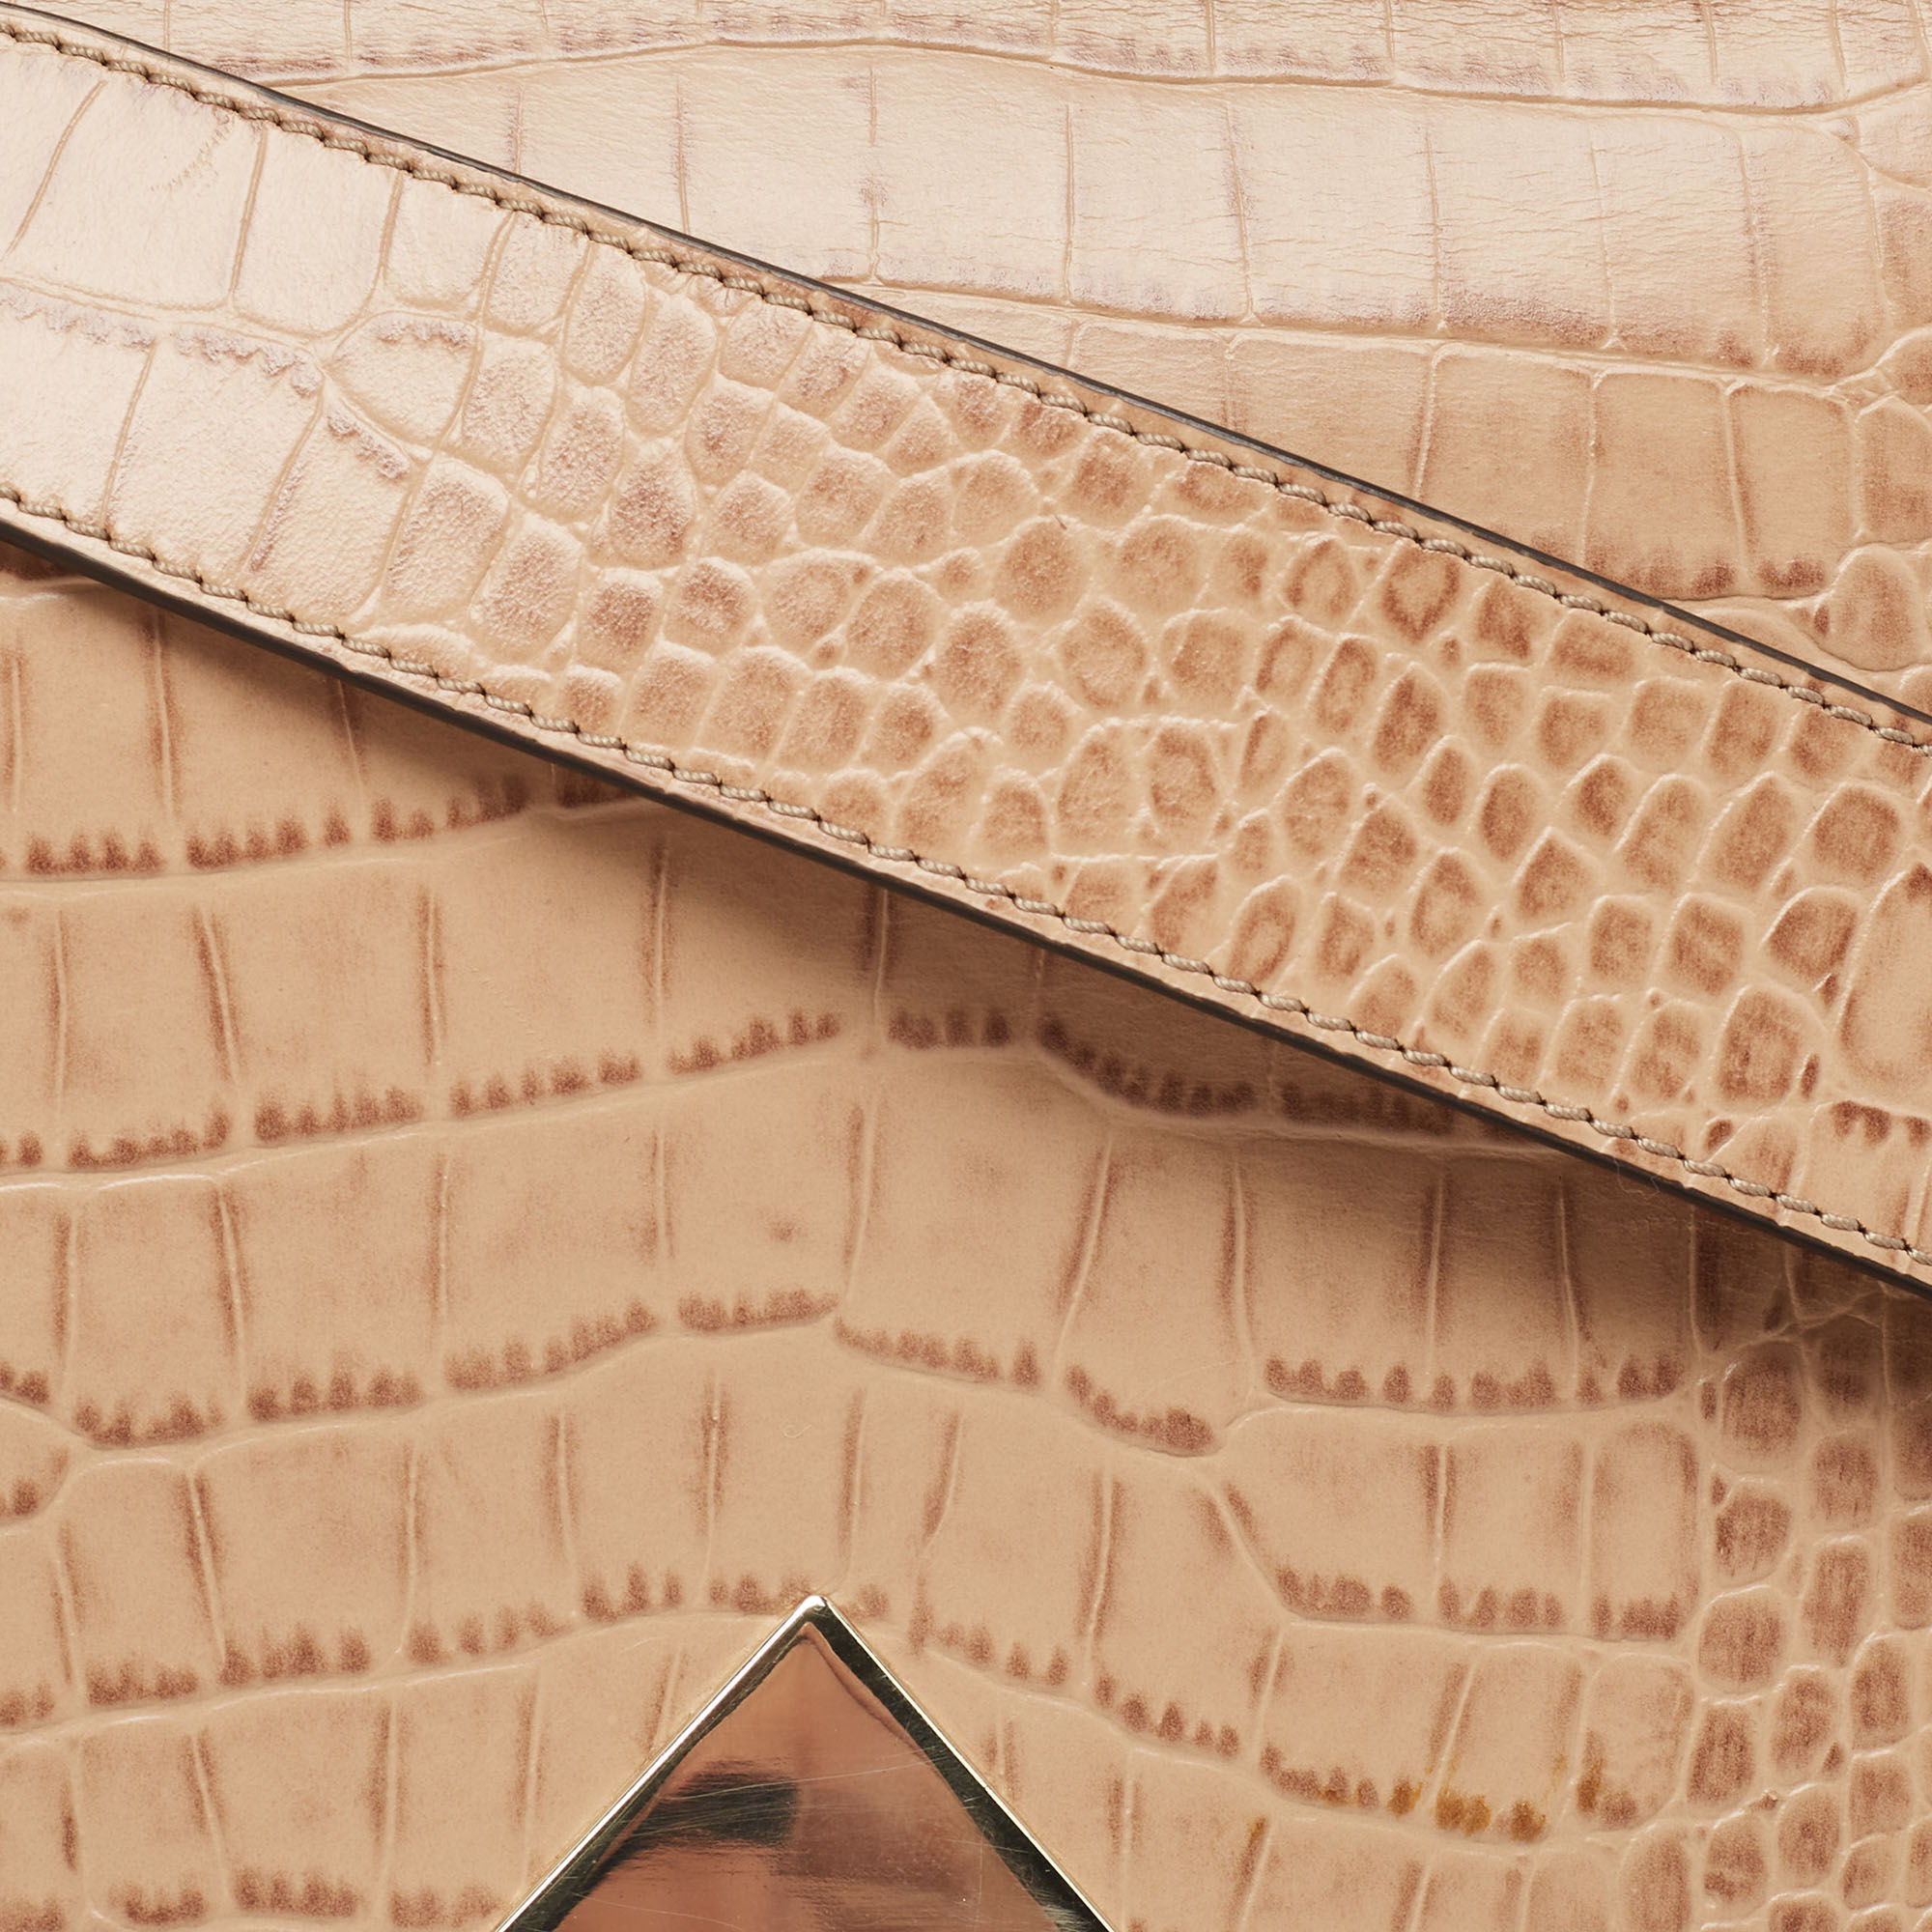 Emporio Armani Beige Croc Embossed Leather Flap Top Handle Bag